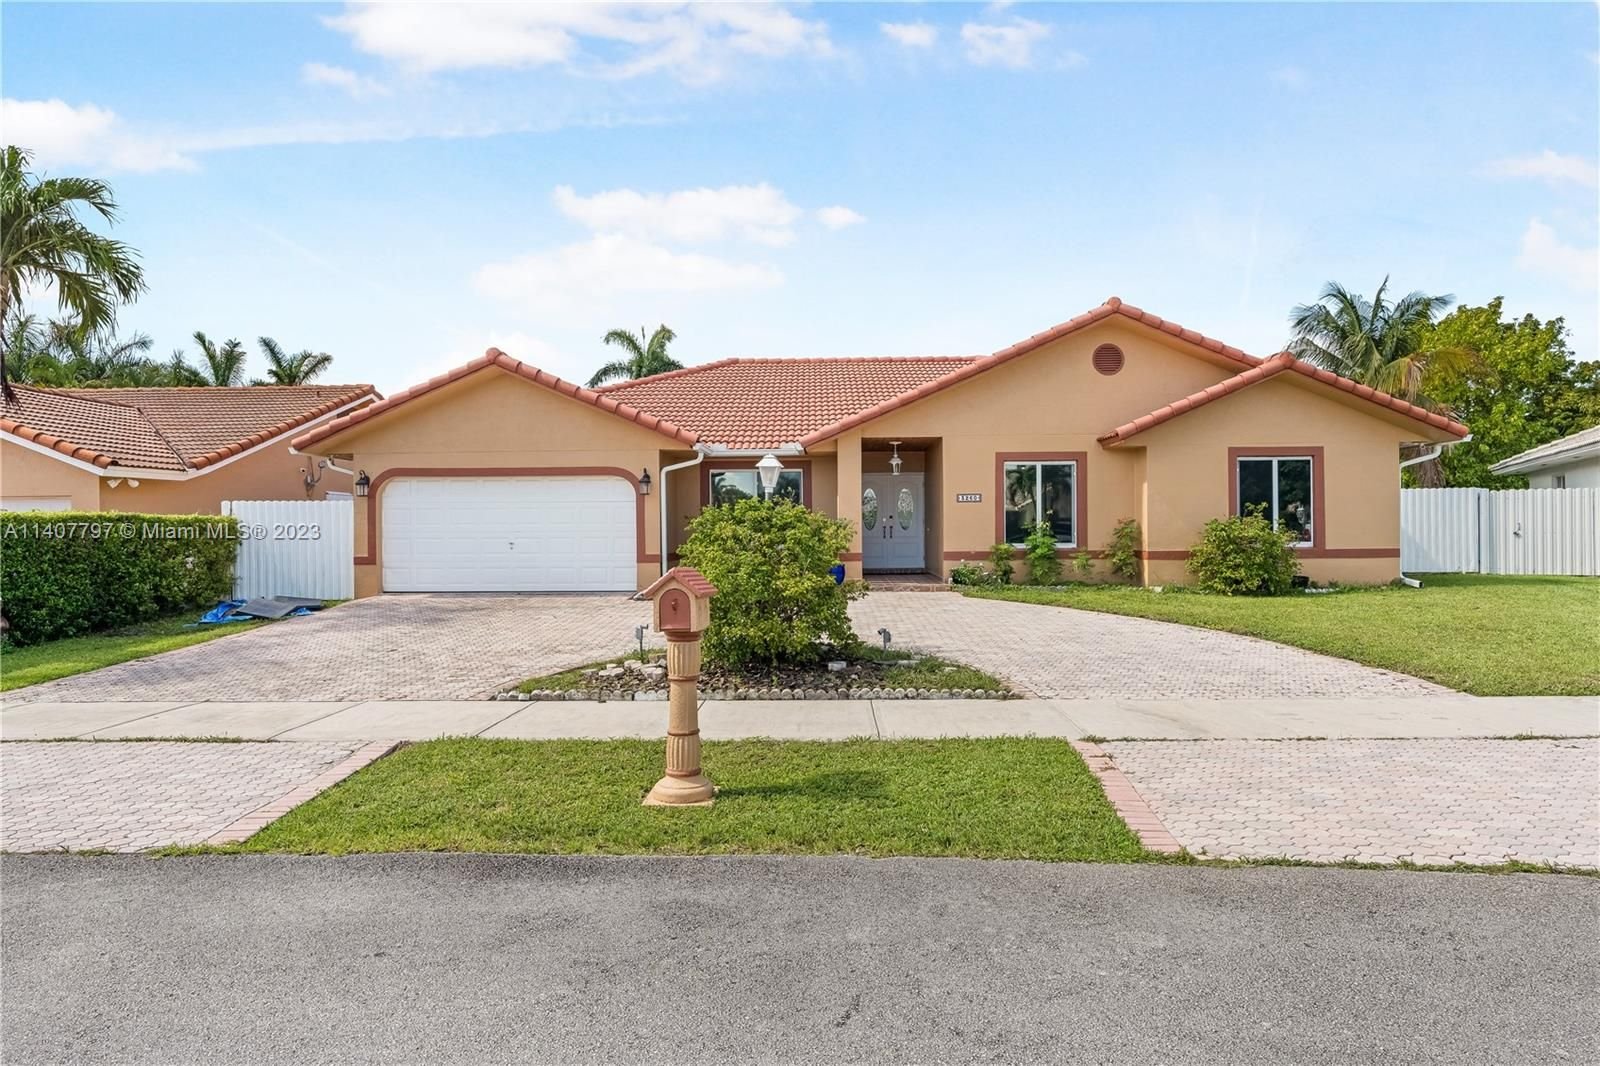 Real estate property located at 3260 134th Ave, Miami-Dade County, Miami, FL